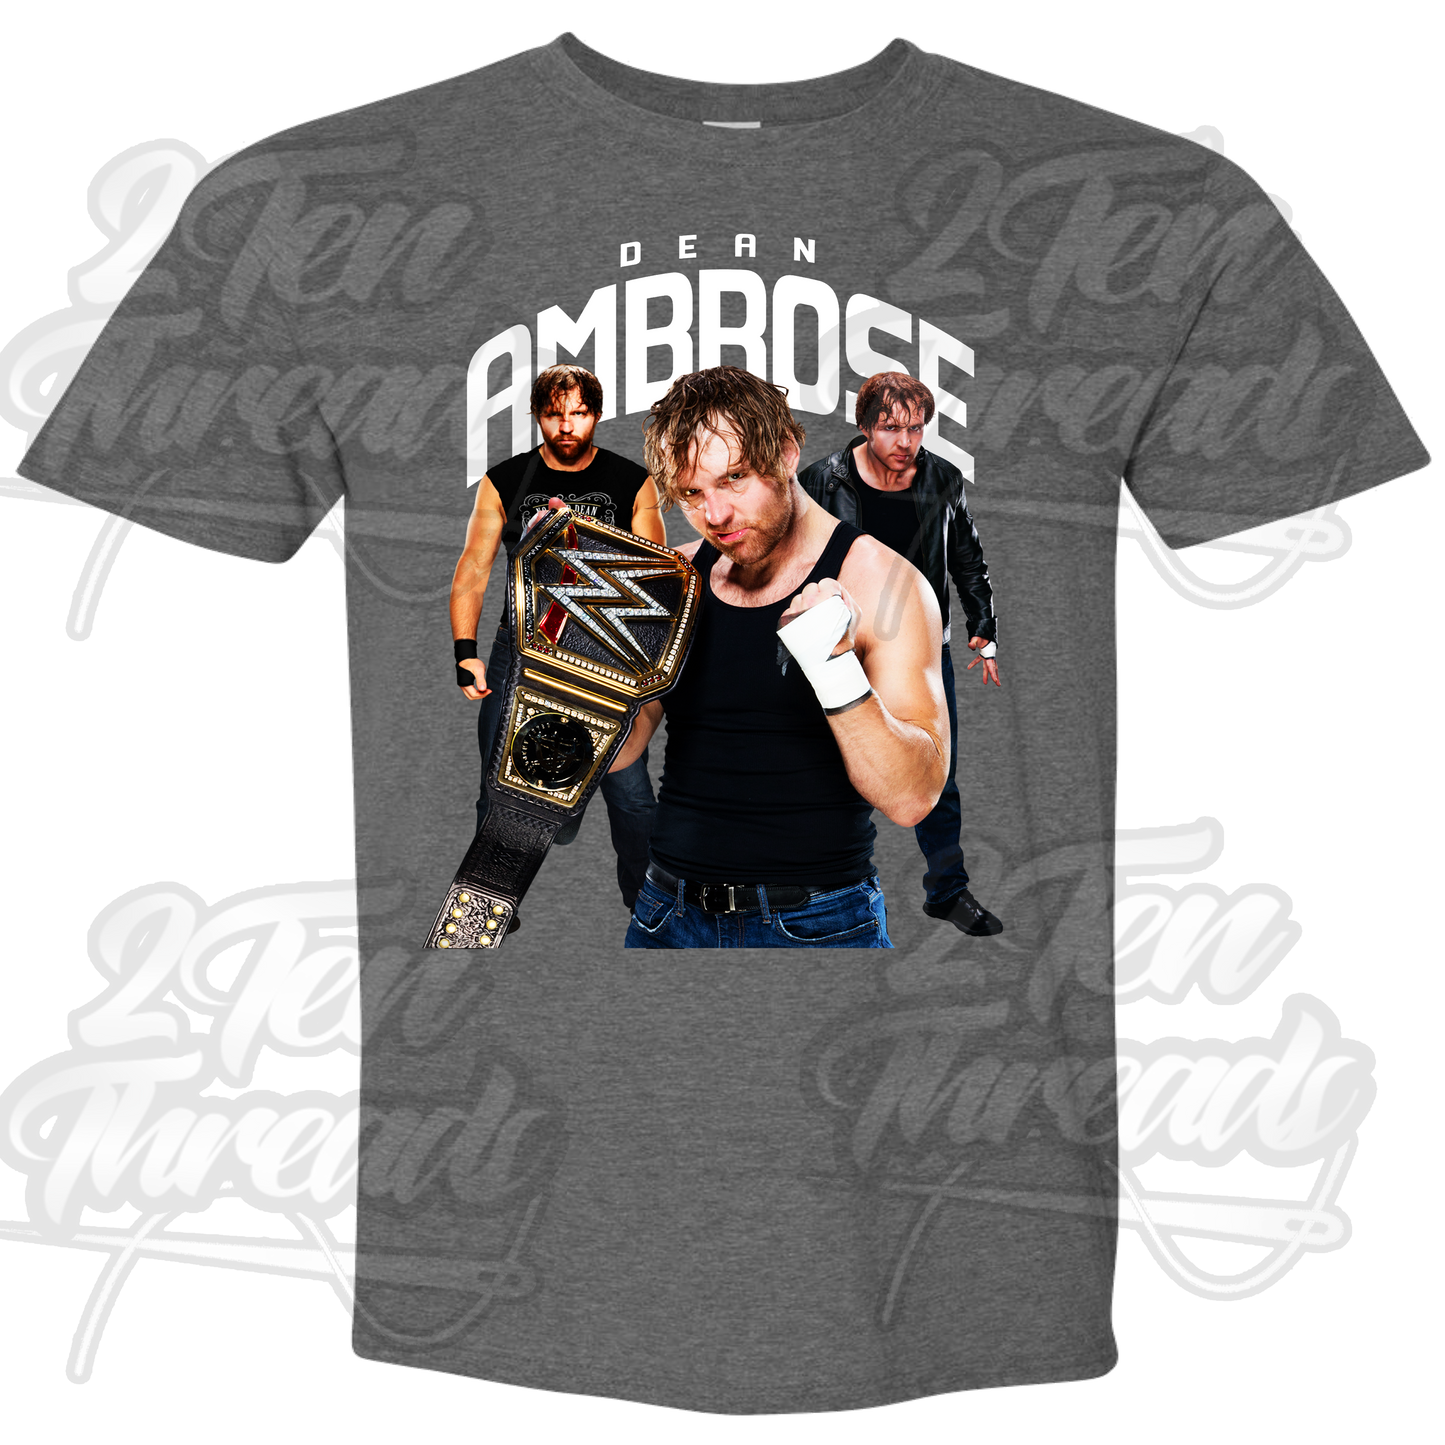 Dean Ambrose Shirt